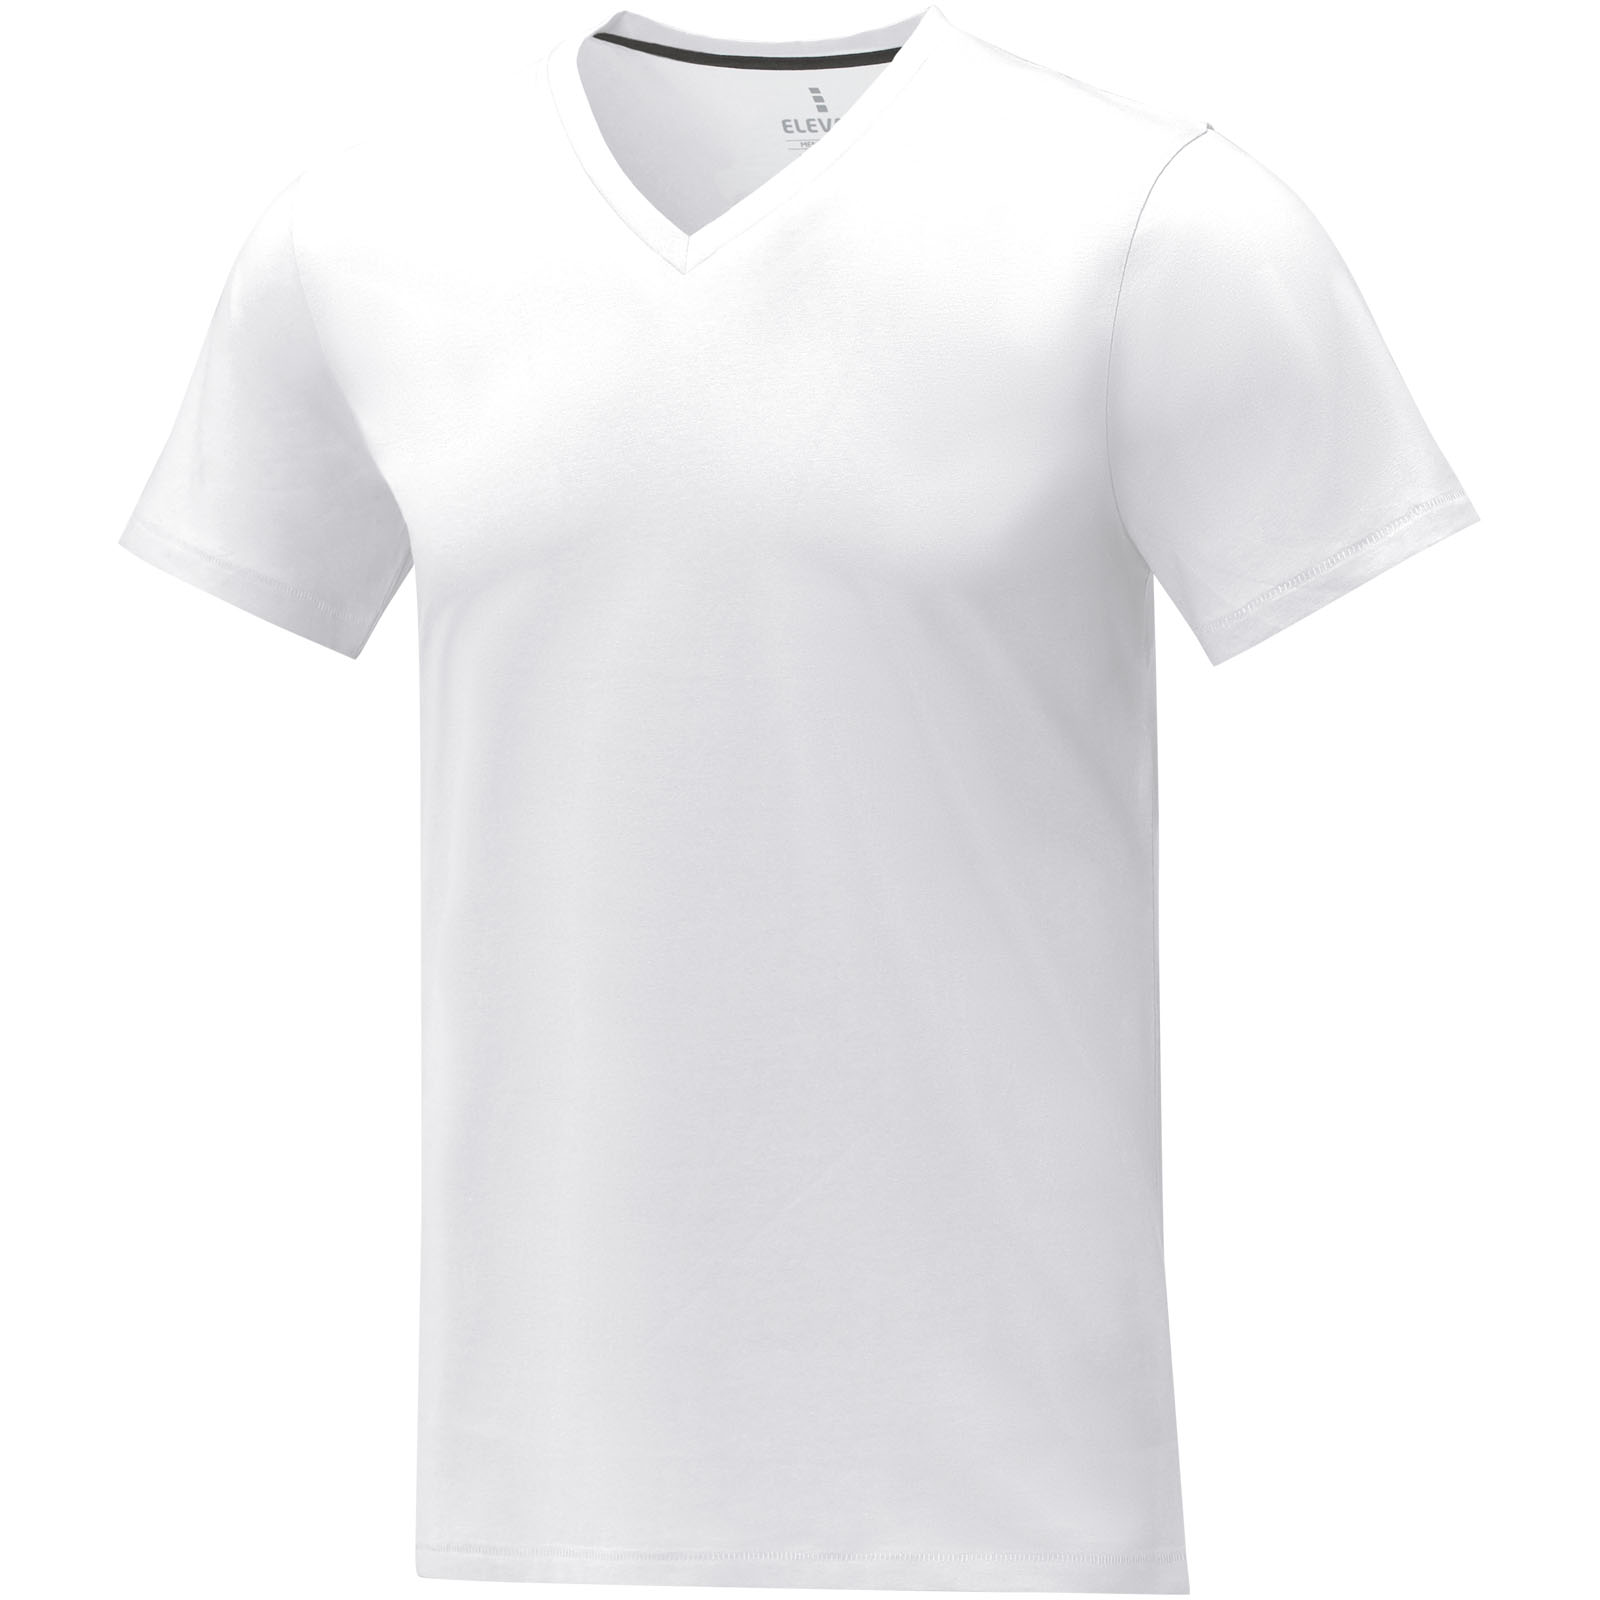 Advertising T-shirts - Somoto short sleeve men's V-neck t-shirt  - 0